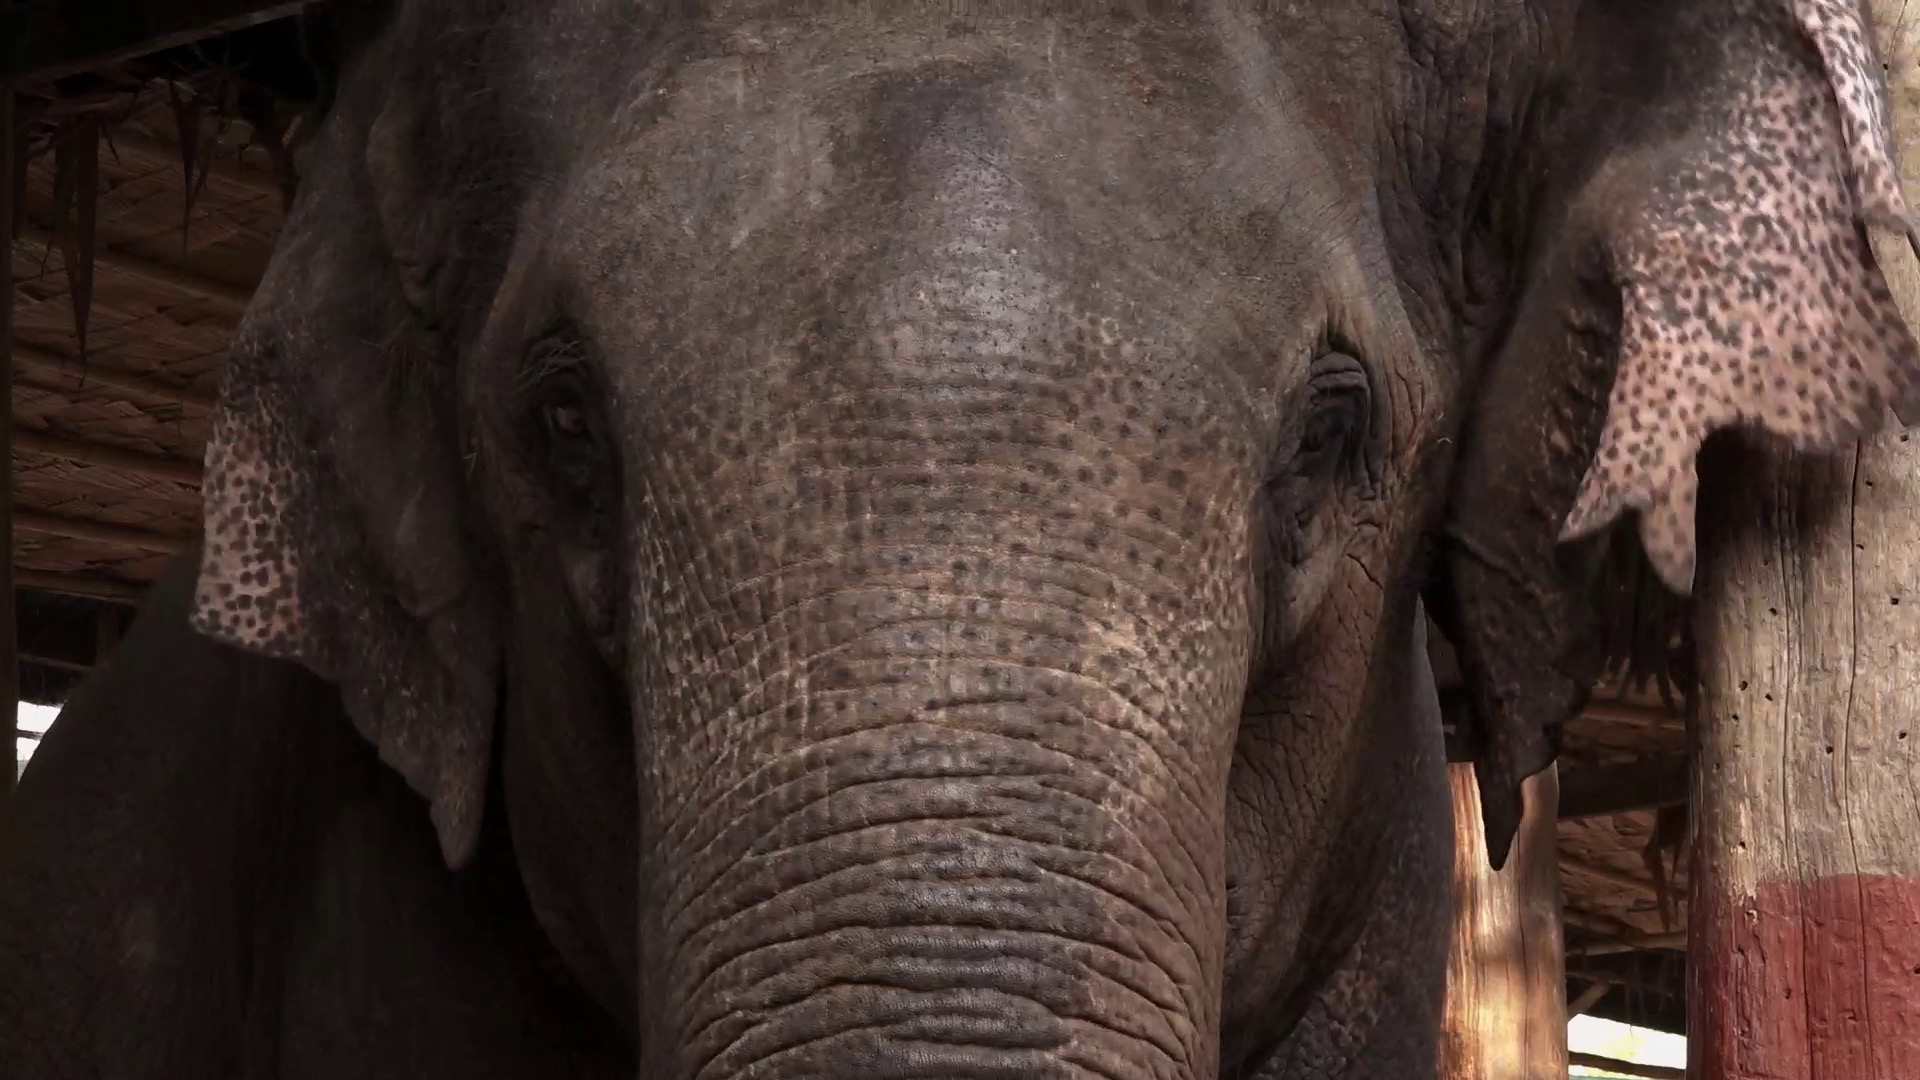 Cage The Elephant - Trouble on Vimeo